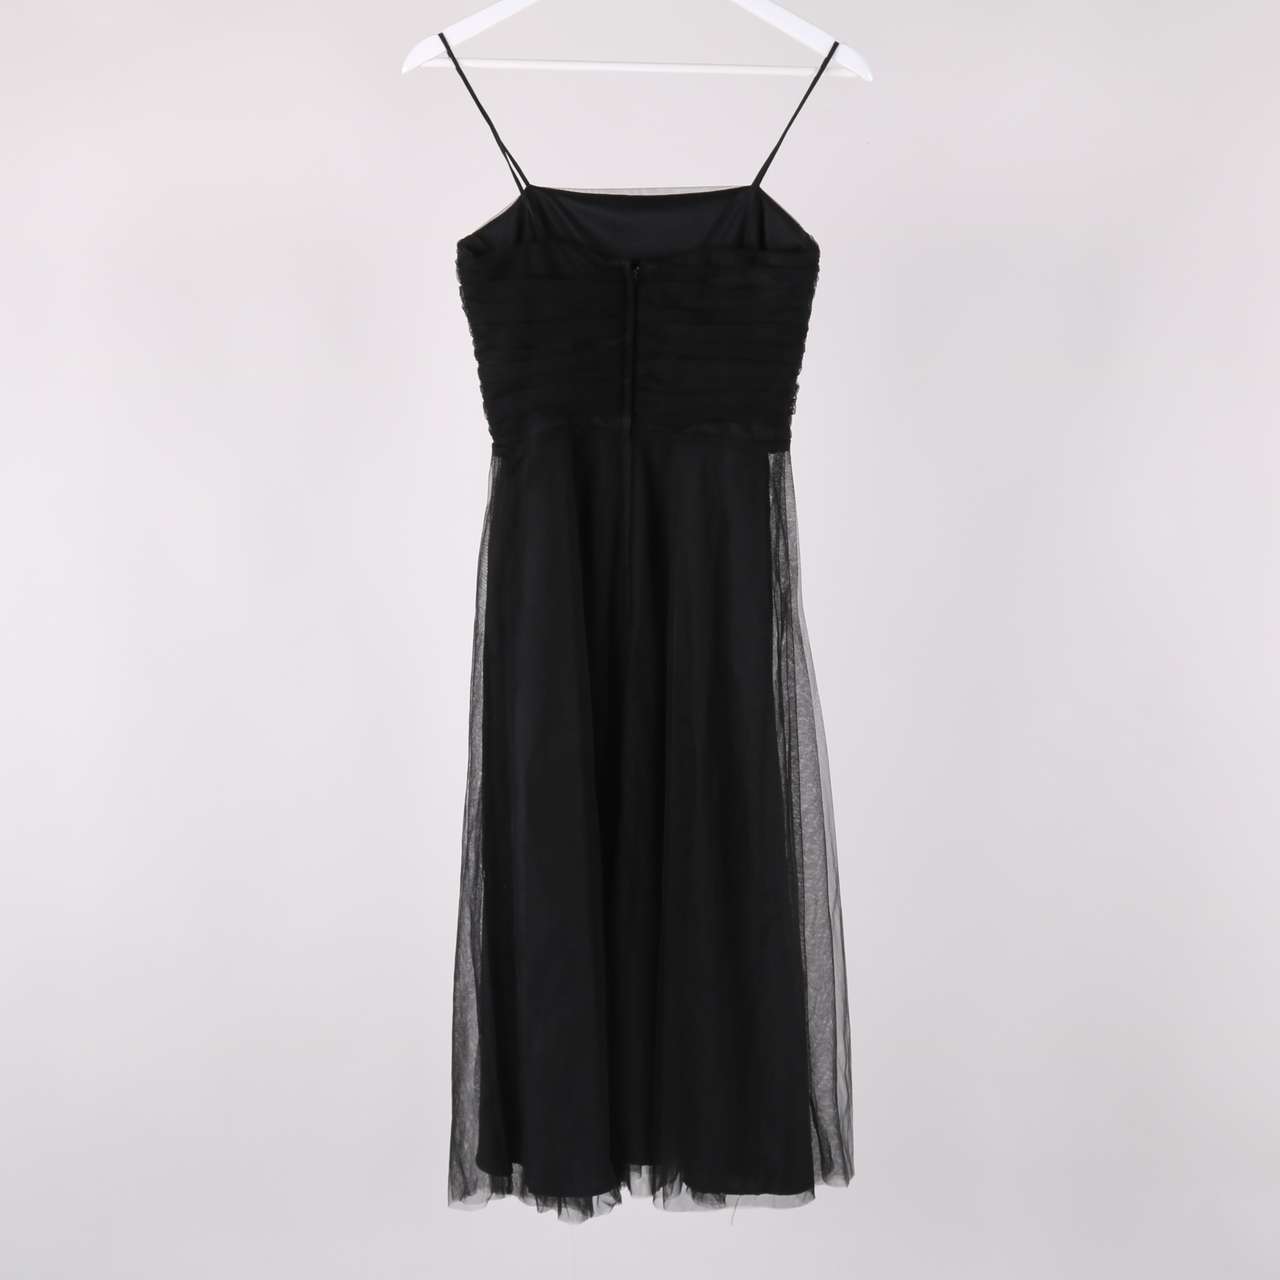 Montego Black Net Midi Dress - Size 10